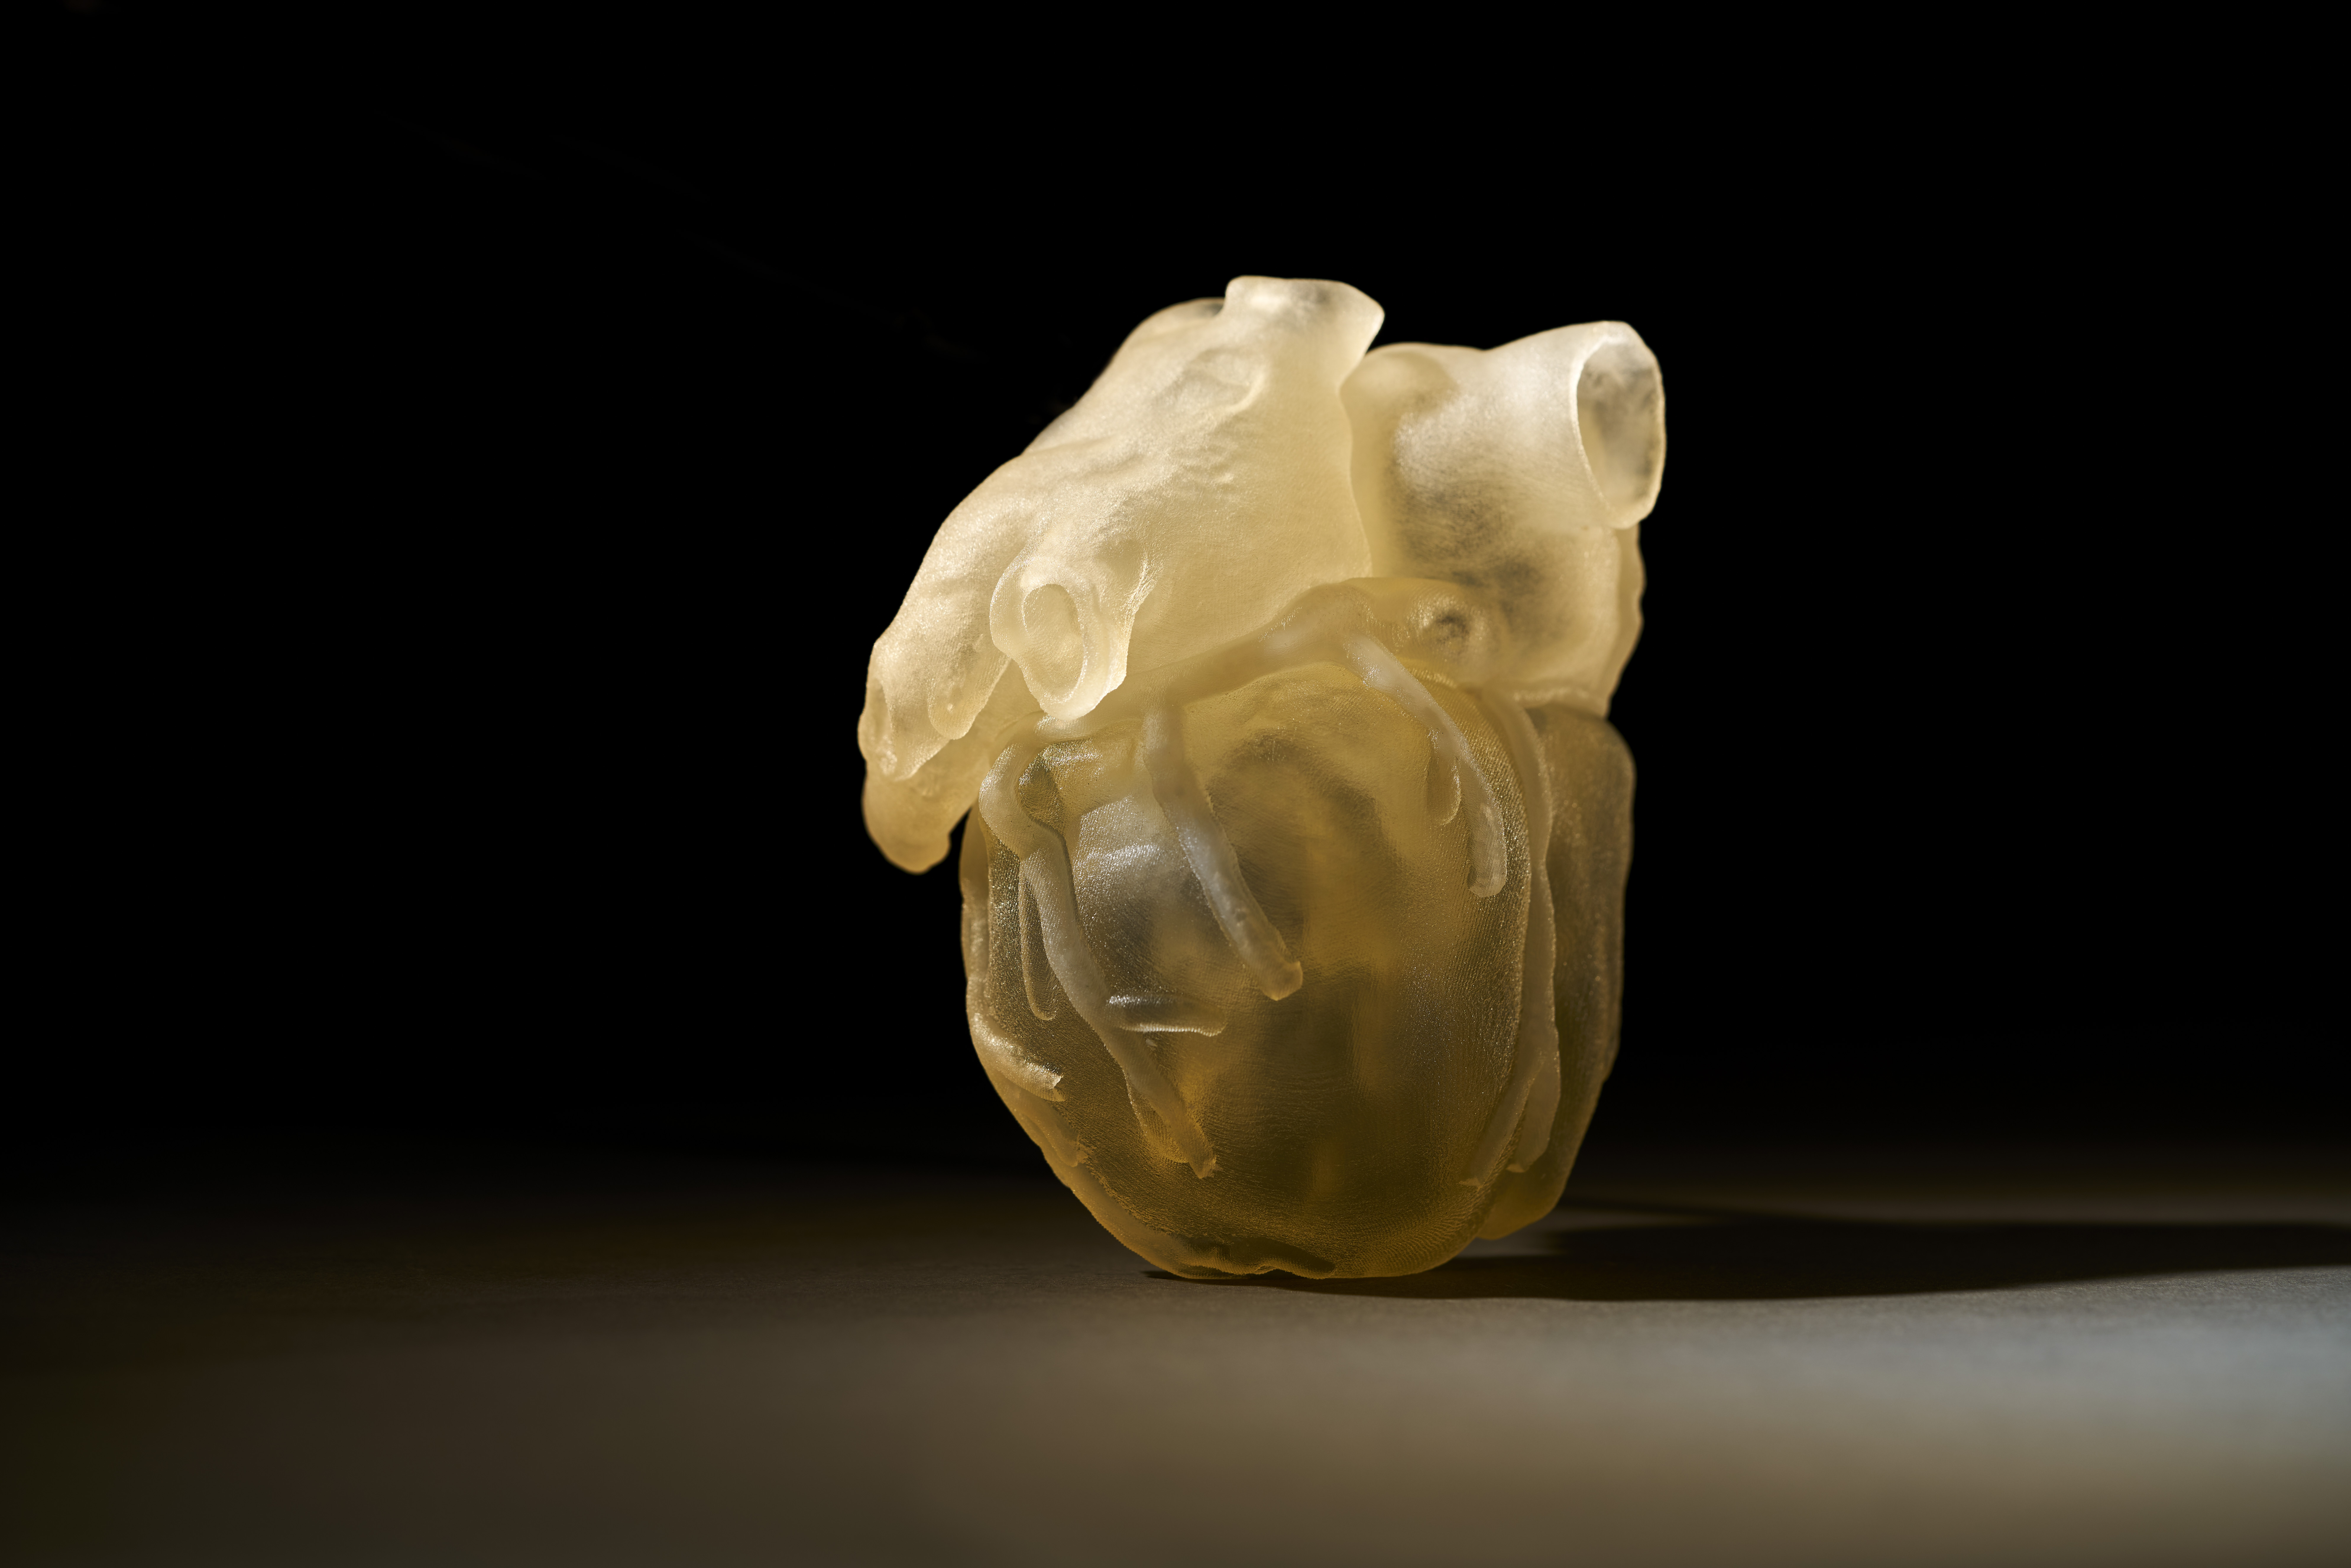 Anatomical heart model made using TissueMatrix on the J750 Digital Anatomy 3D printer. Photo via Stratasys